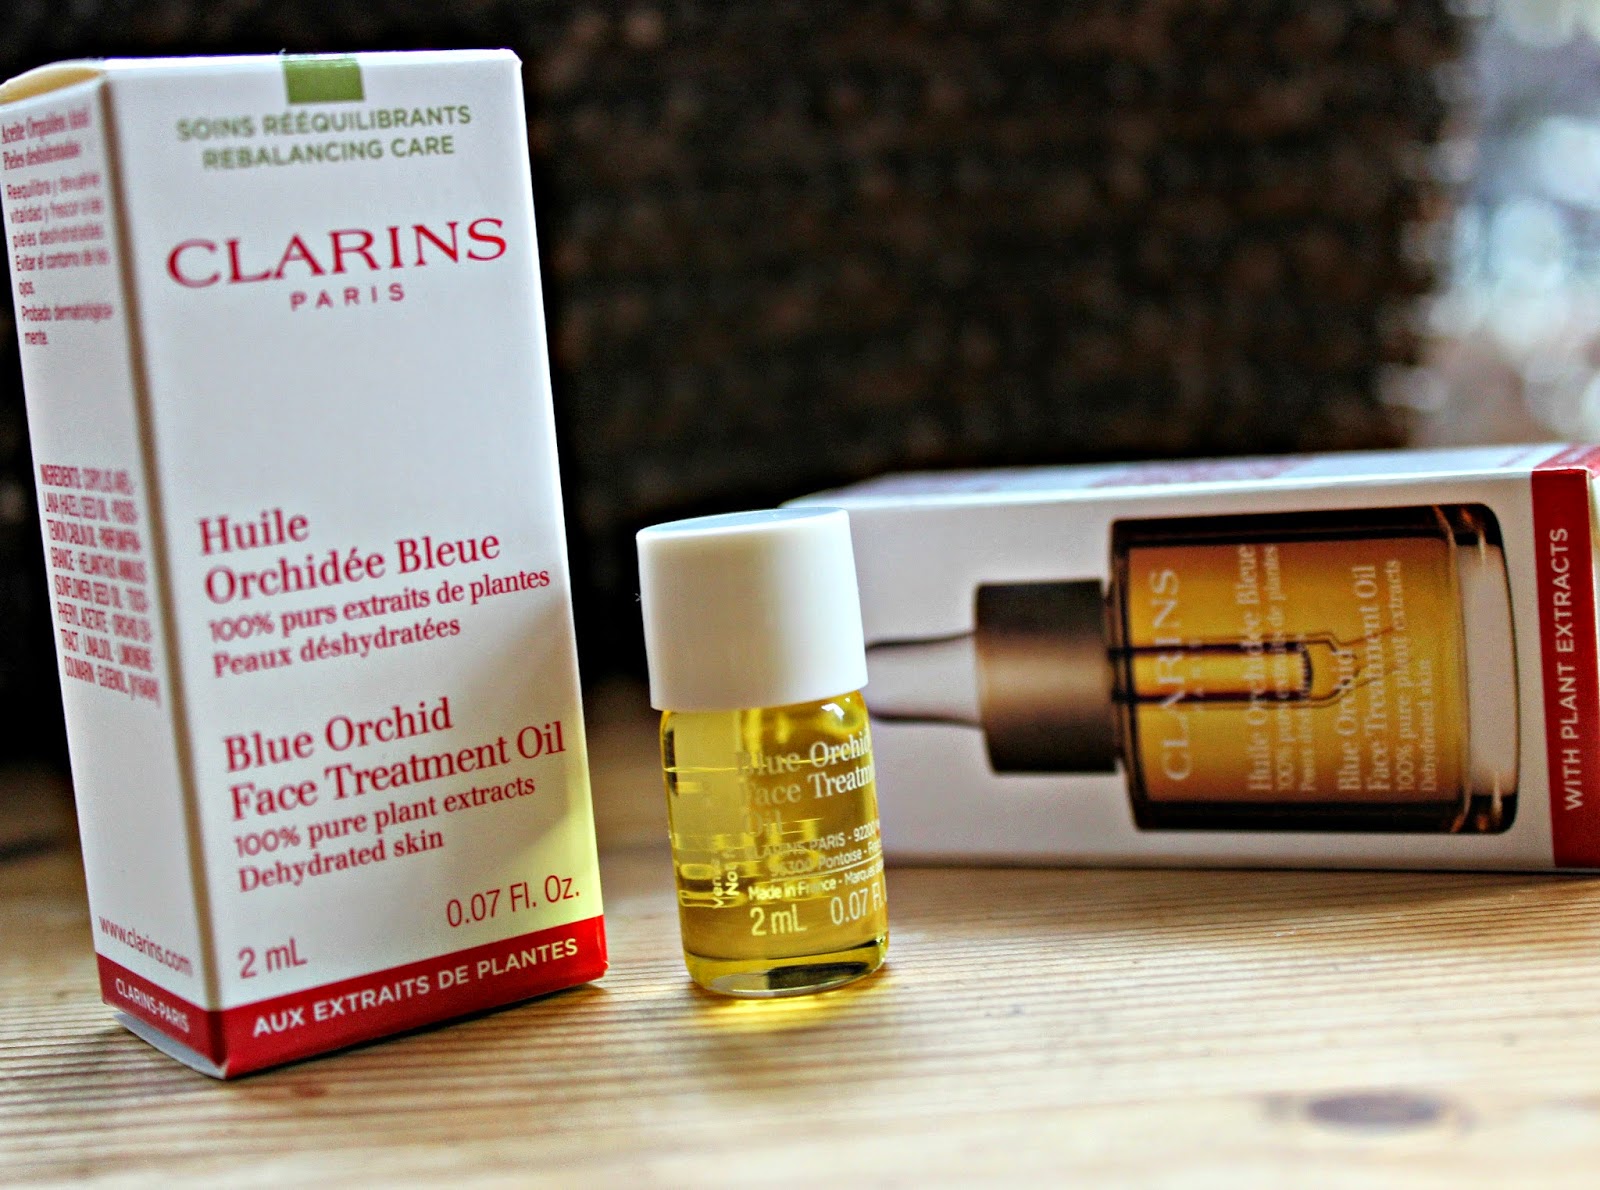 à¸à¸¥à¸à¸²à¸£à¸à¹à¸à¸«à¸²à¸£à¸¹à¸à¸à¸²à¸à¸ªà¸³à¸«à¸£à¸±à¸ Clarins Blue Orchid Face Treatment Oil